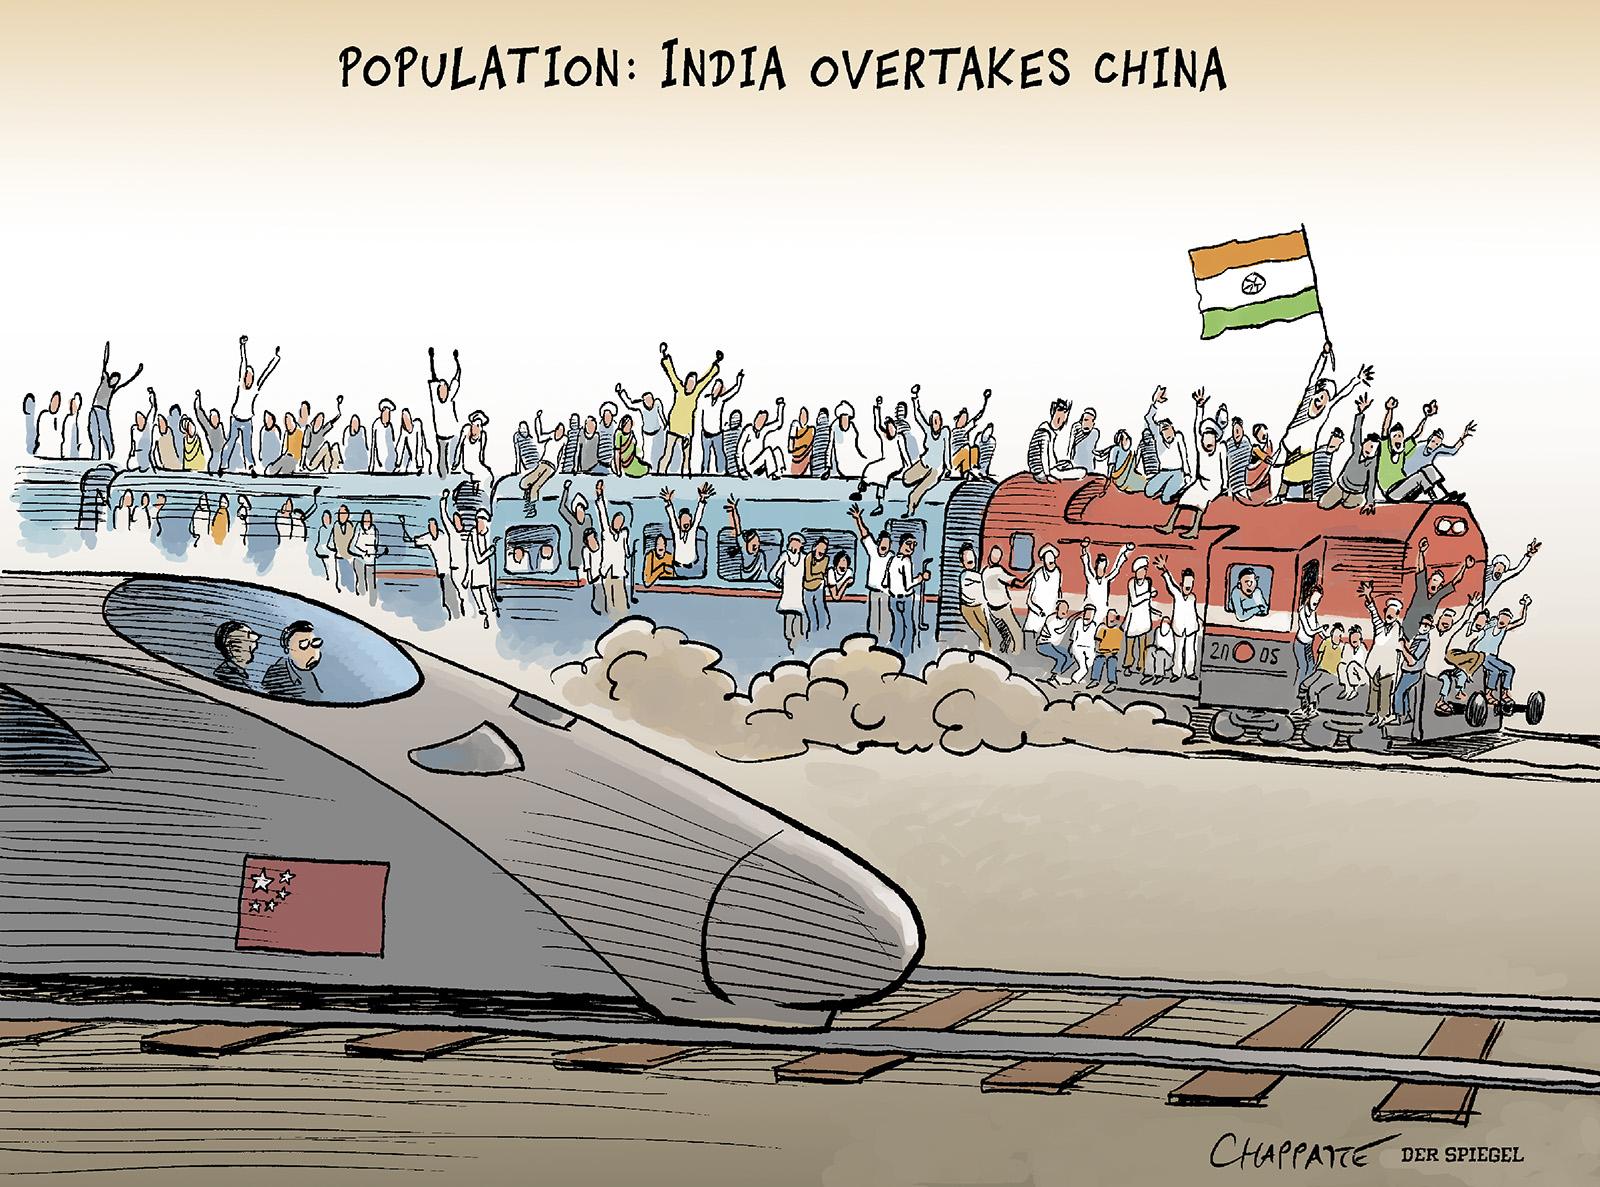 Population: India overtakes China